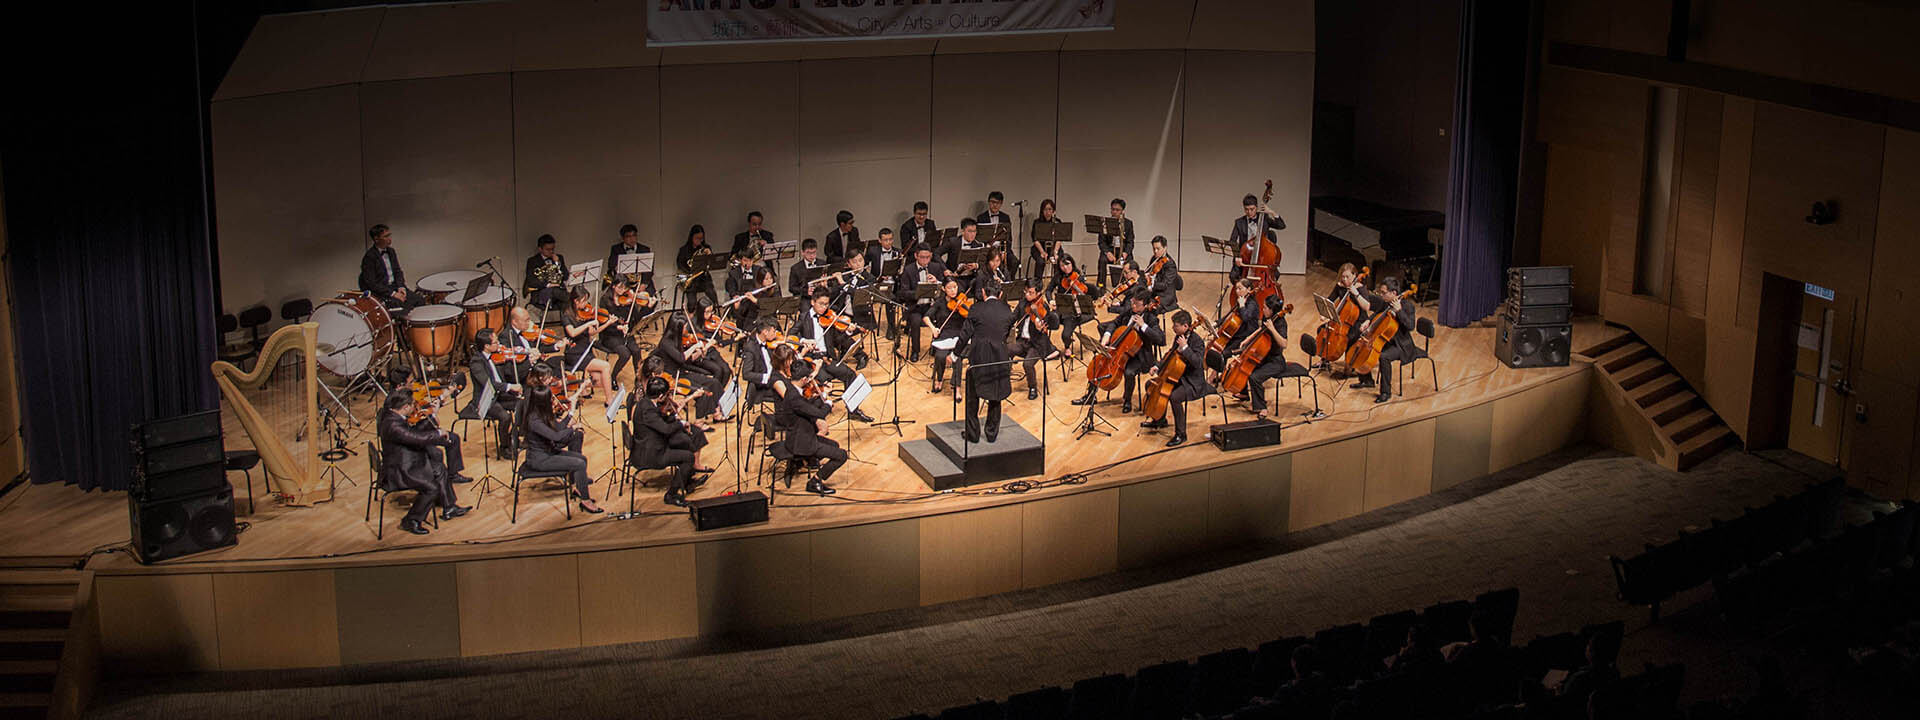 CityU Philharmonic Orchestra